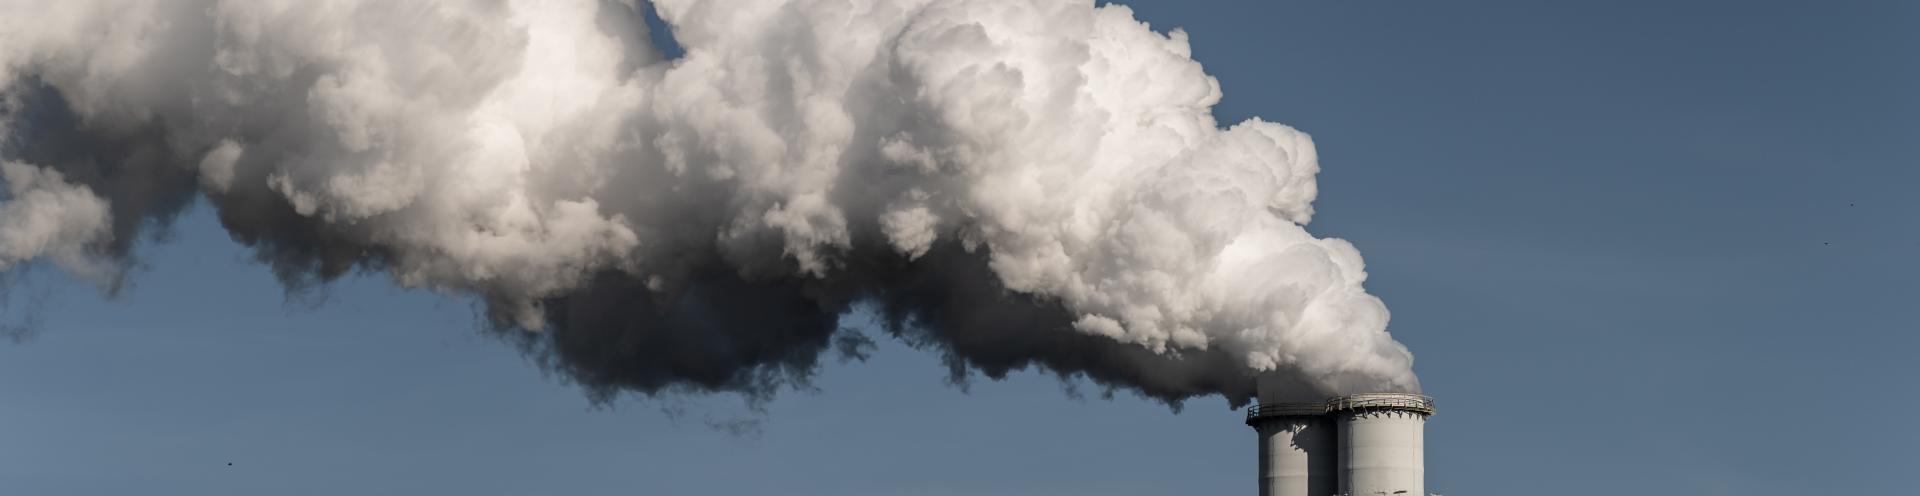 CO2 emissions from a chimney of a fossil fuel (coal) power station (foto: Shutterstock, Sander van der Werf)